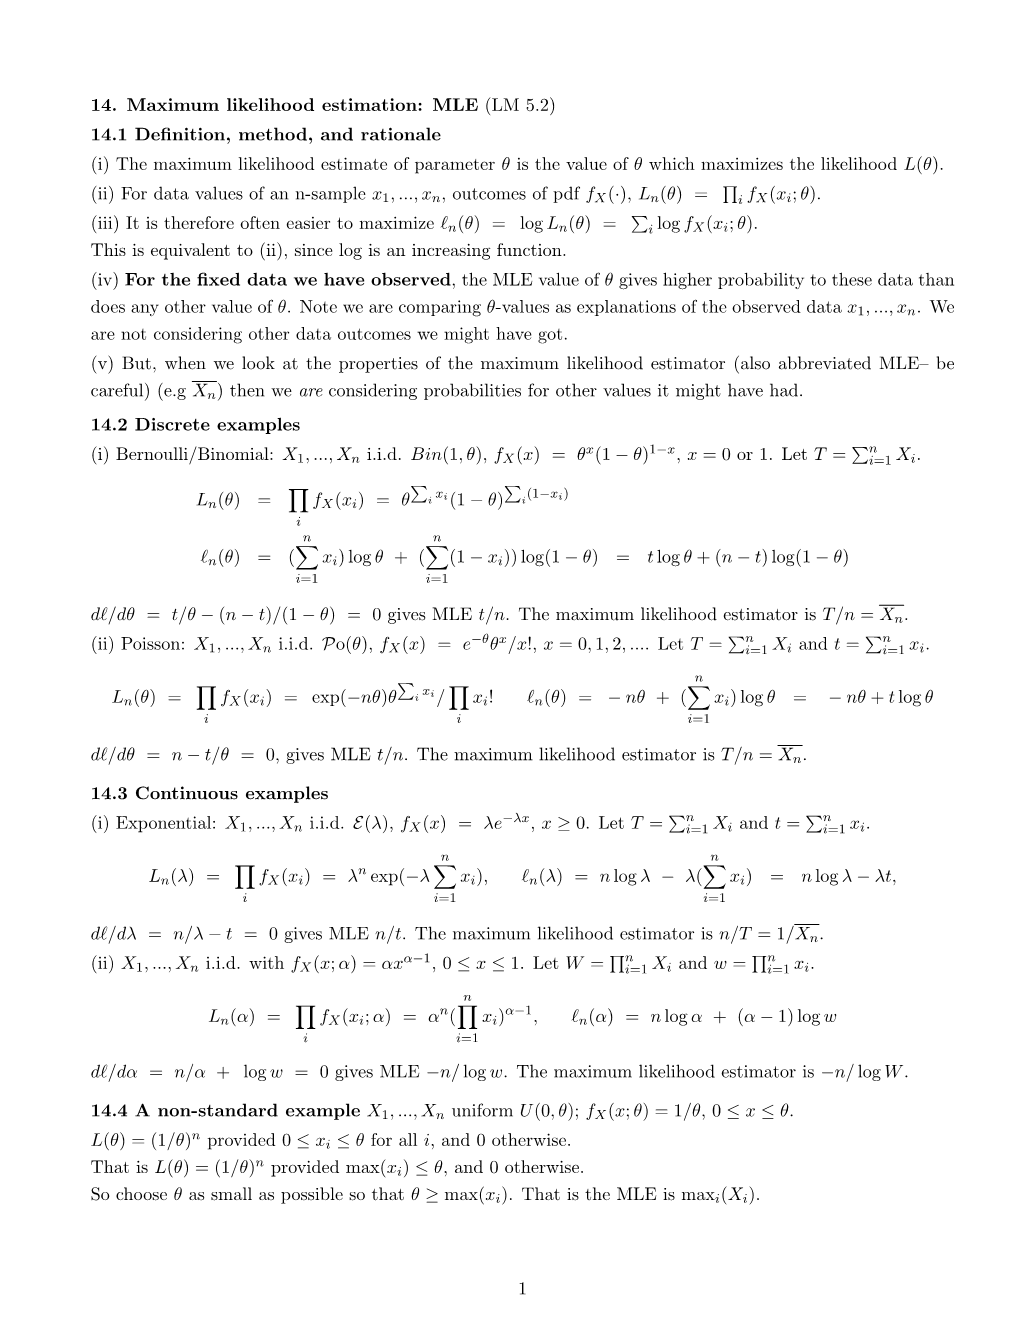 14. Maximum Likelihood Estimation: MLE (LM 5.2)